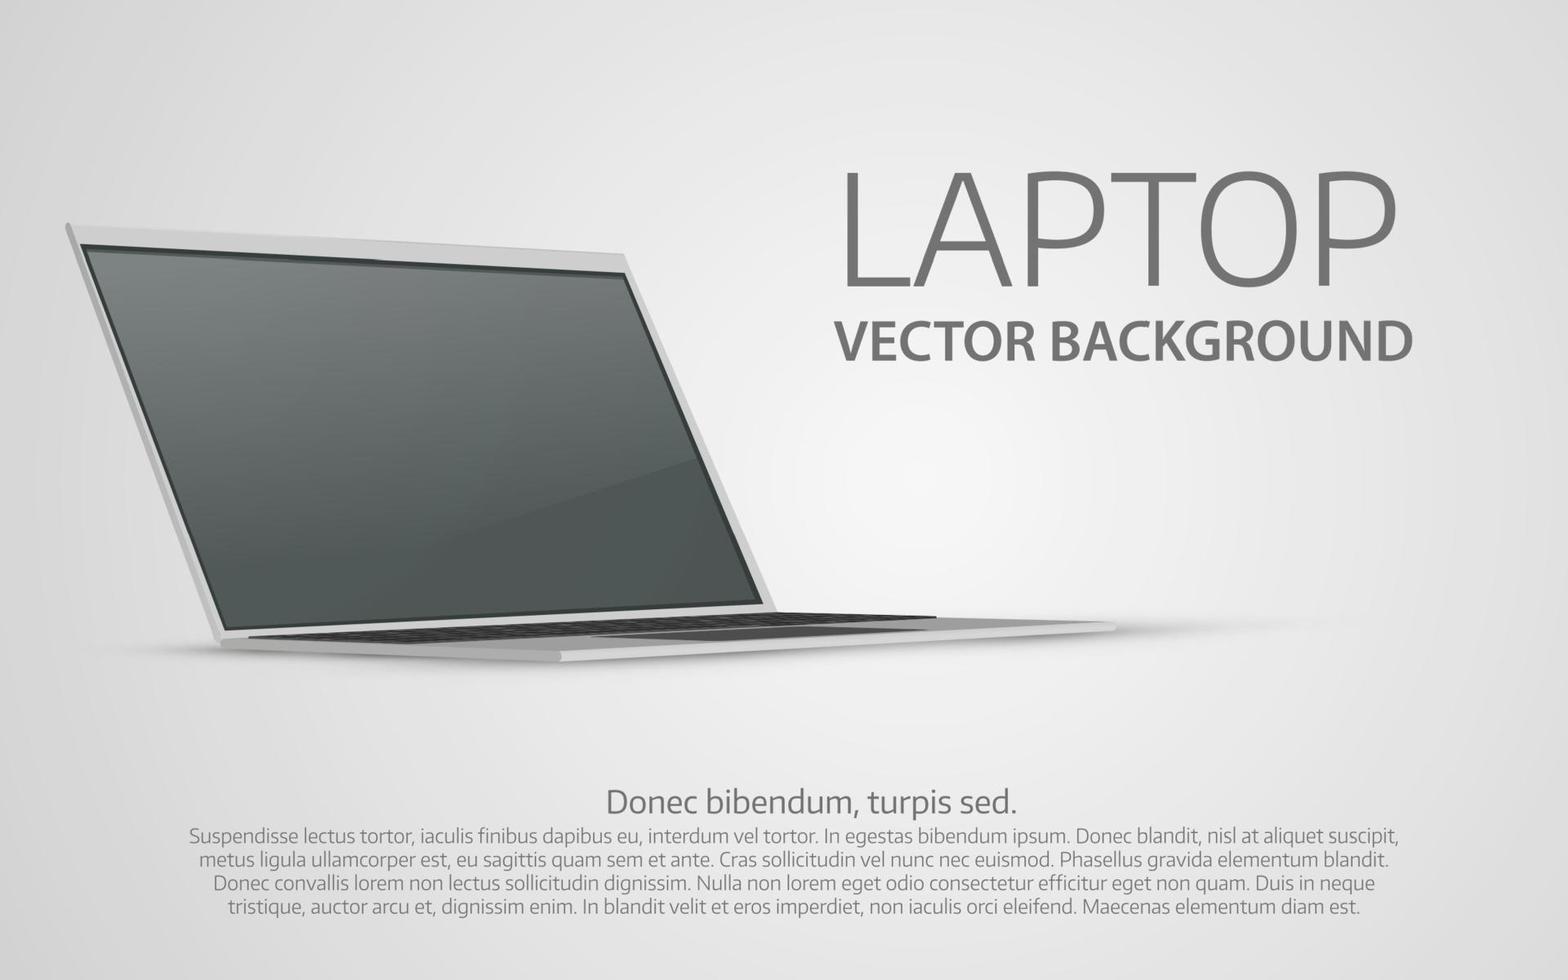 bärbar dator på grå bakgrund. affisch eller banner design. vektor